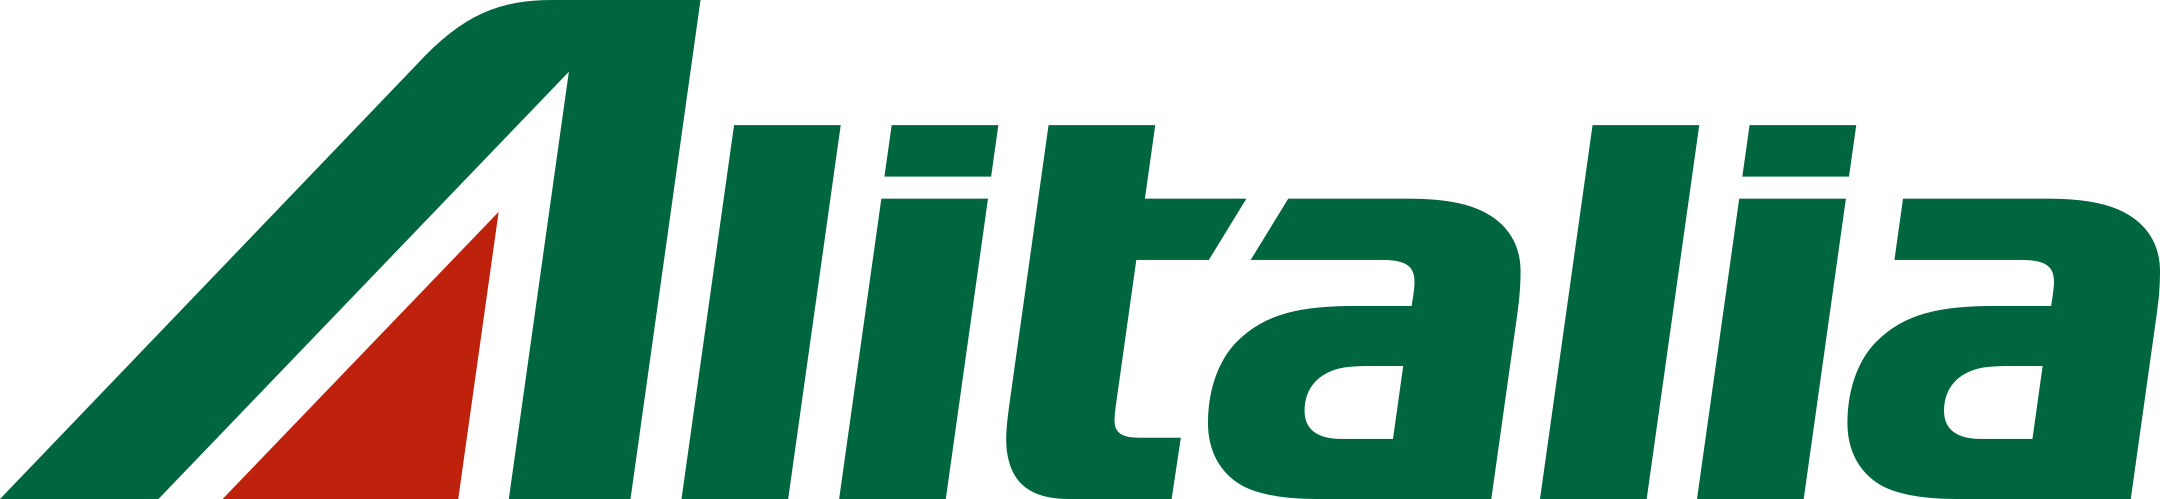 alitalia logo 1 - Alitalia Logo